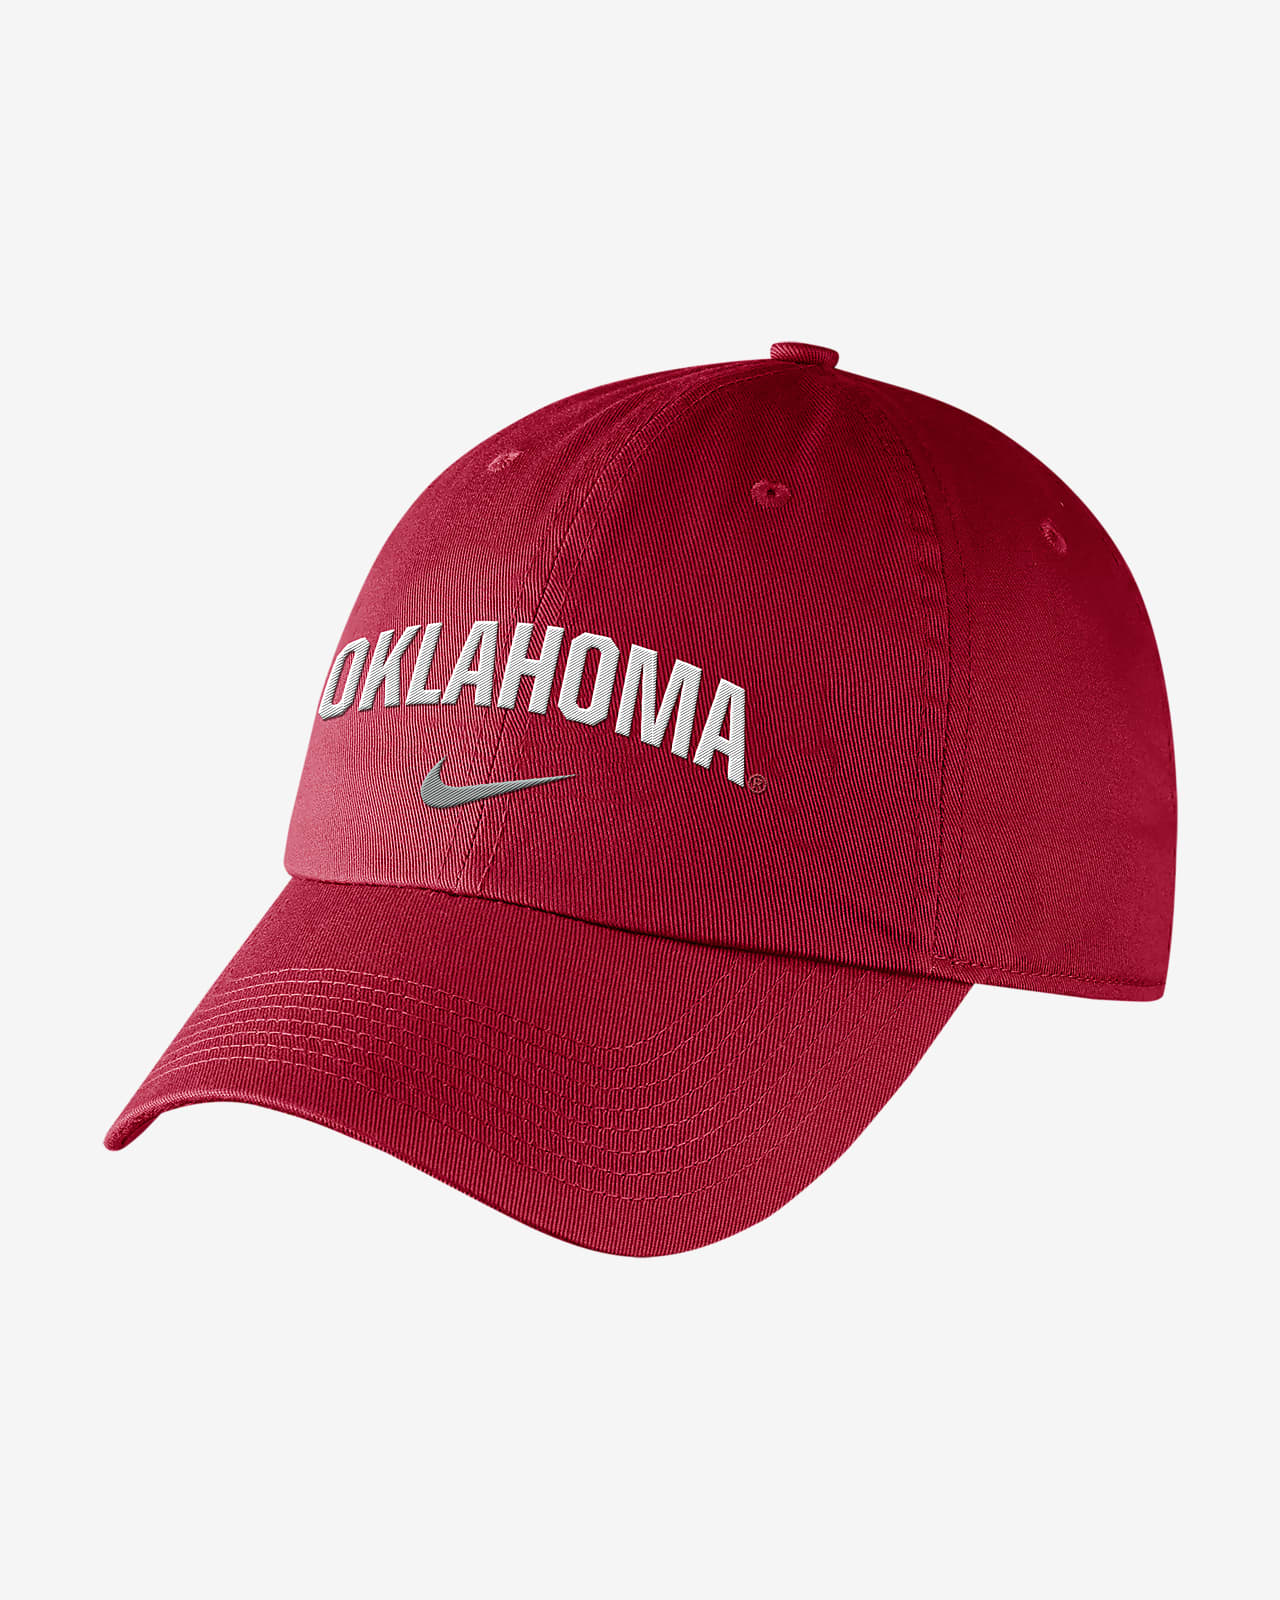 Nike College (Oklahoma) Hat